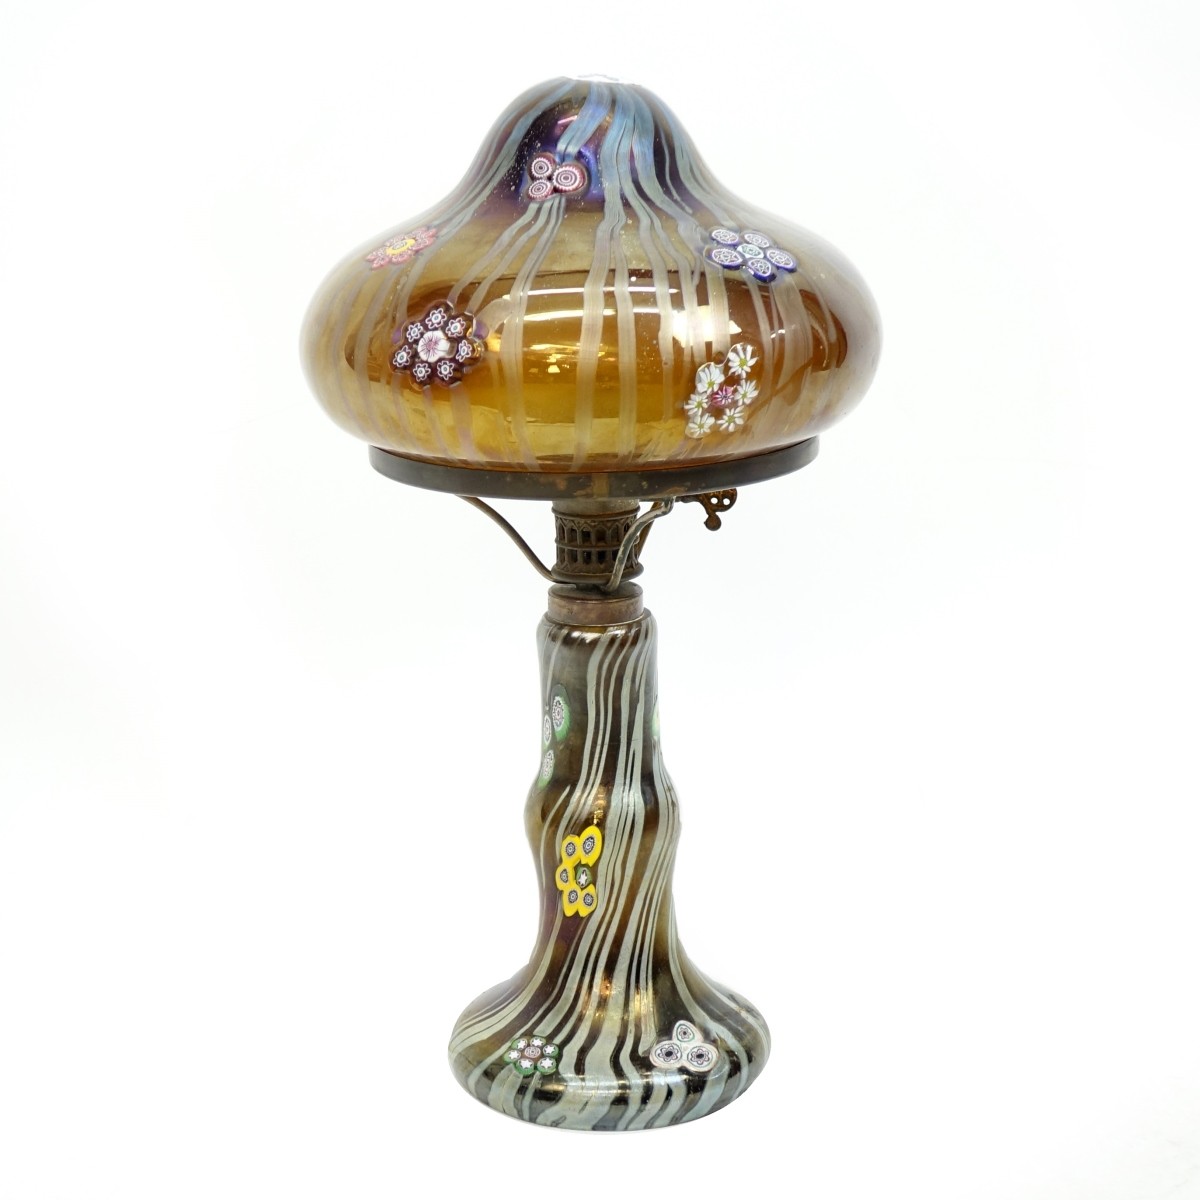 Attrb: Fratelli Torso Murano Art Glass Lamp